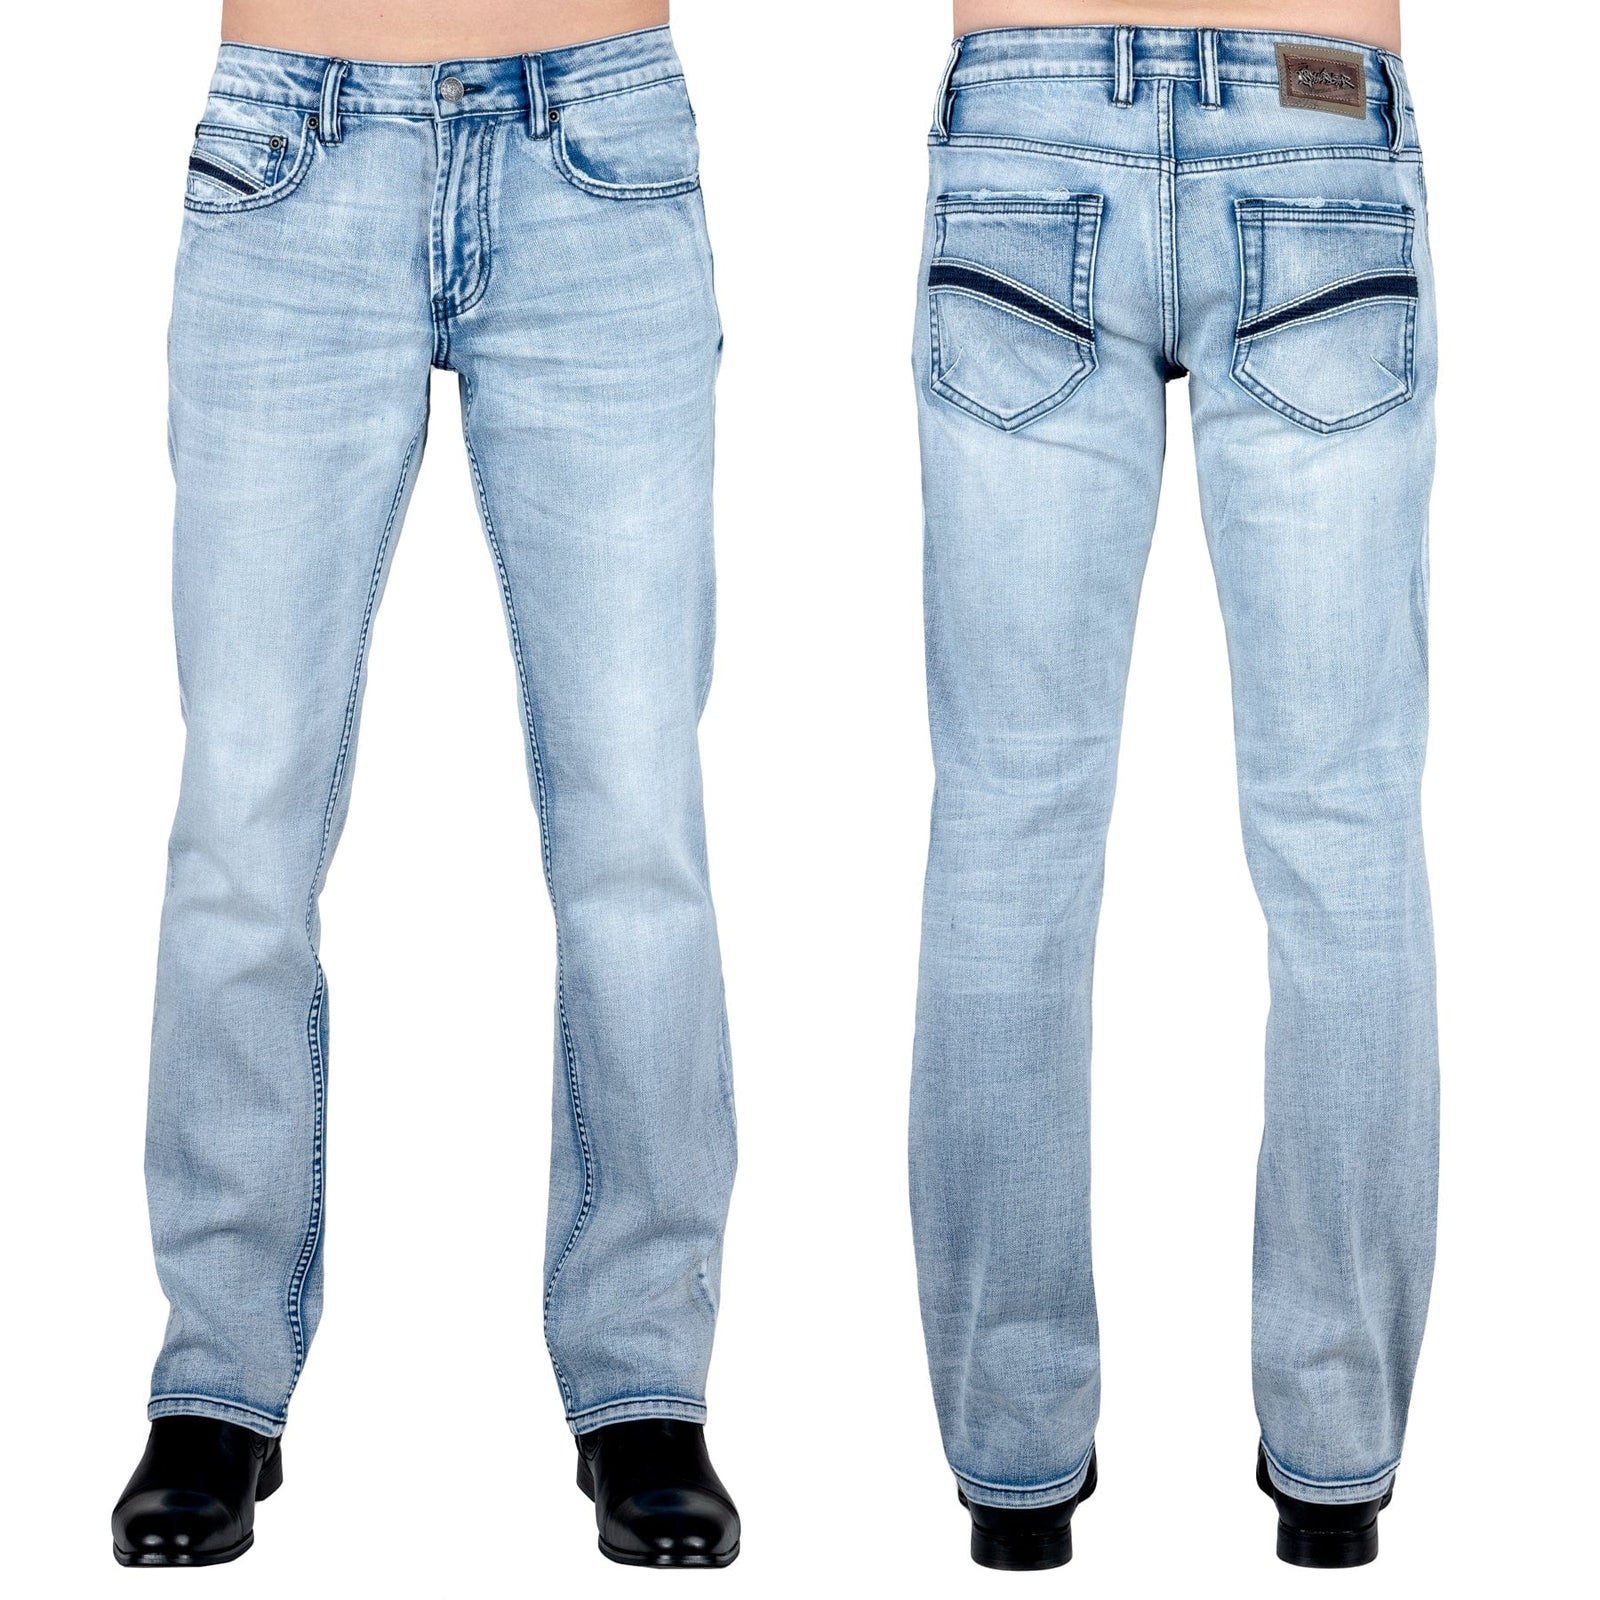 Wornstar Clothing Mens Jeans. Trailblazer Denim Pants - Classic Blue